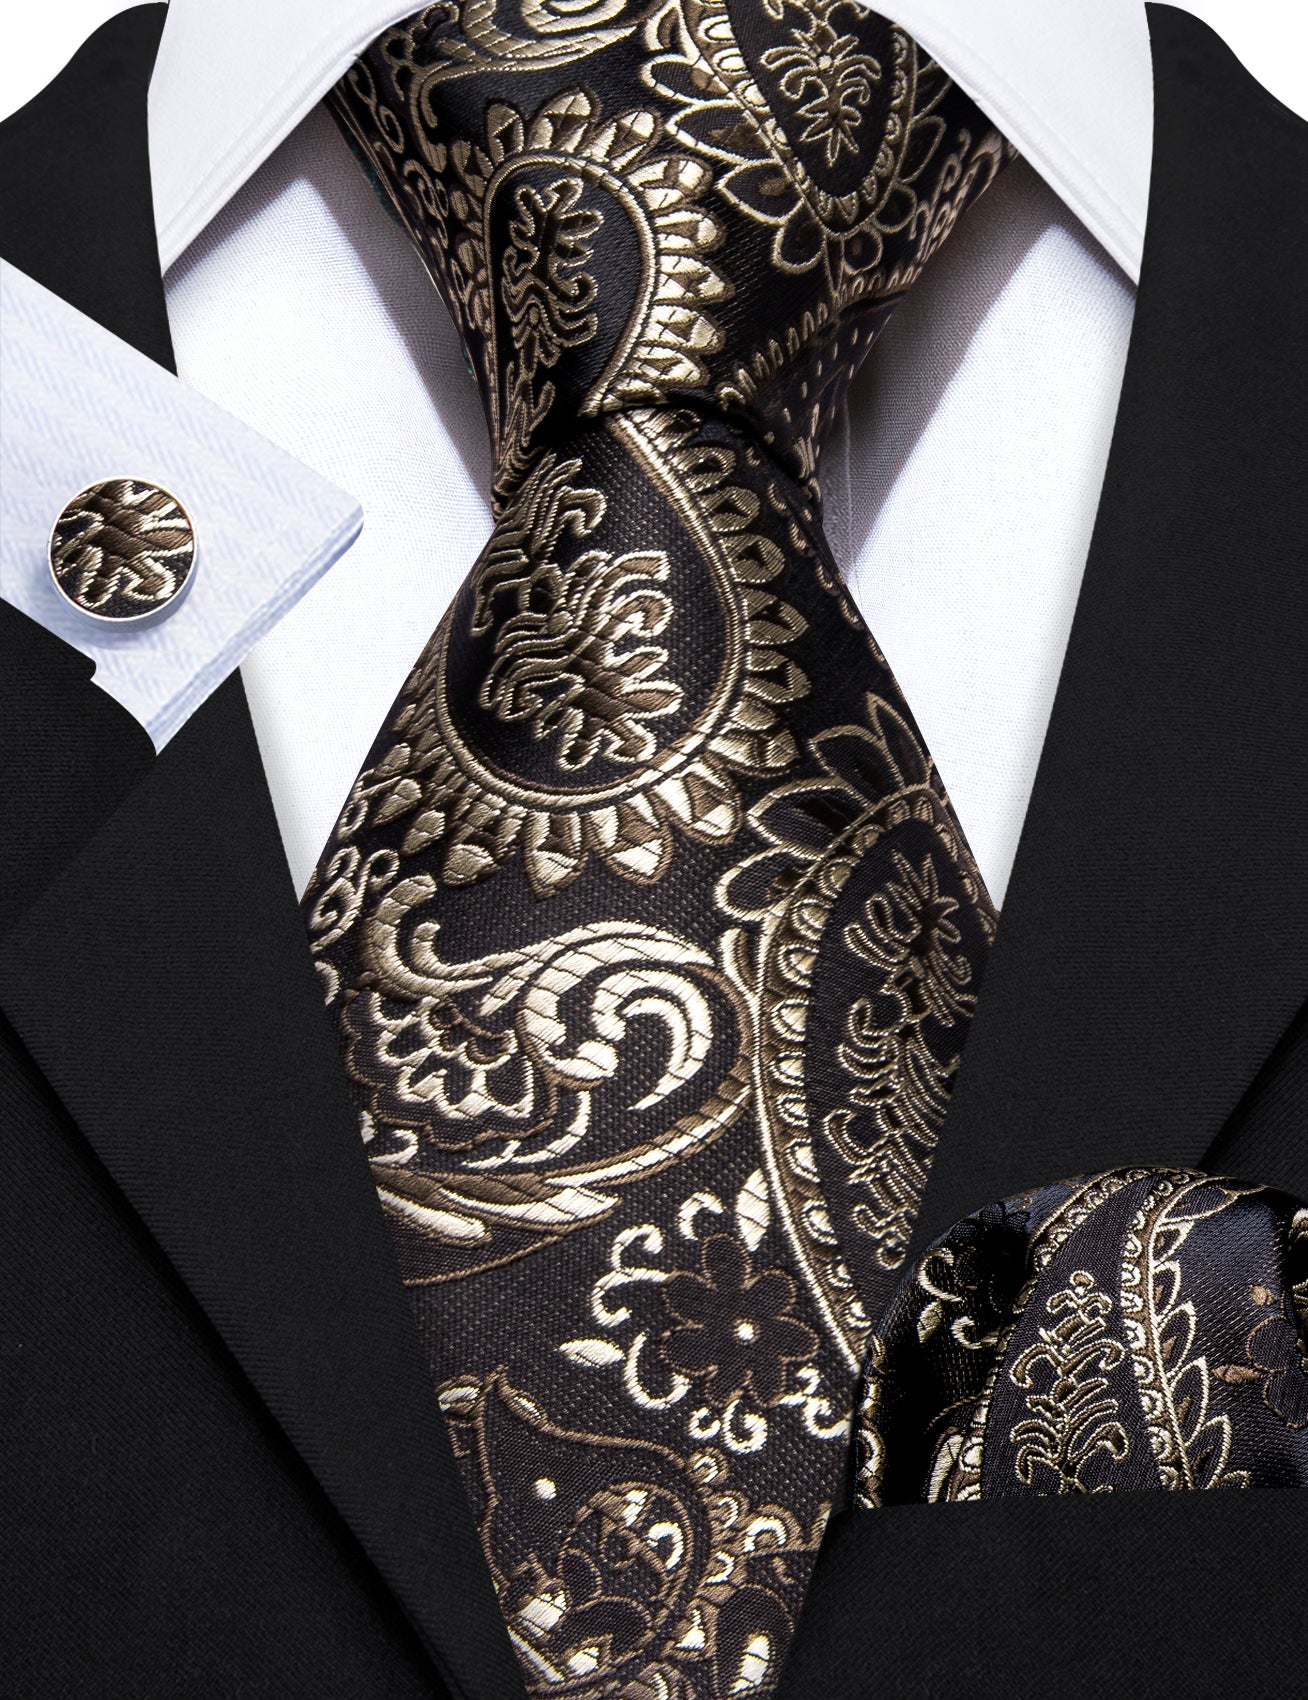 Barry.wang Brown Tie Champagne Paisley Silk Tie Handkerchief Cufflinks Set